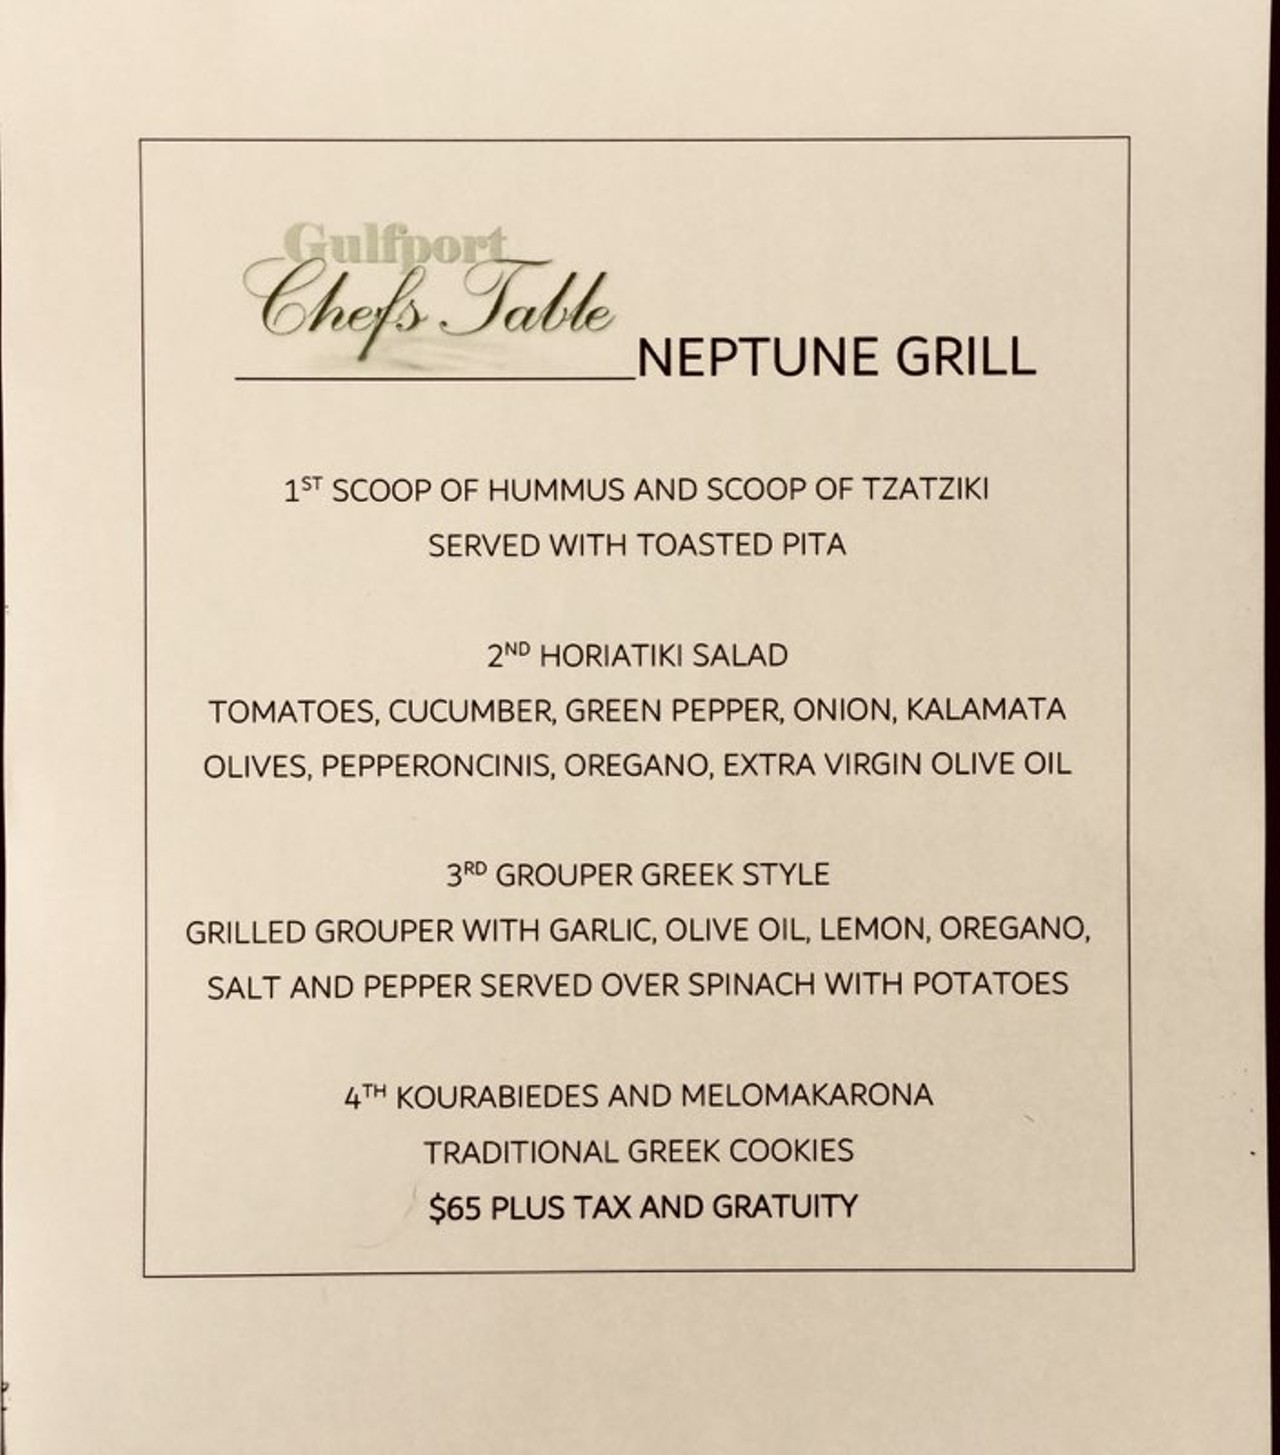 Gulfport Chef's Table 2018 Neptune Grill's menu